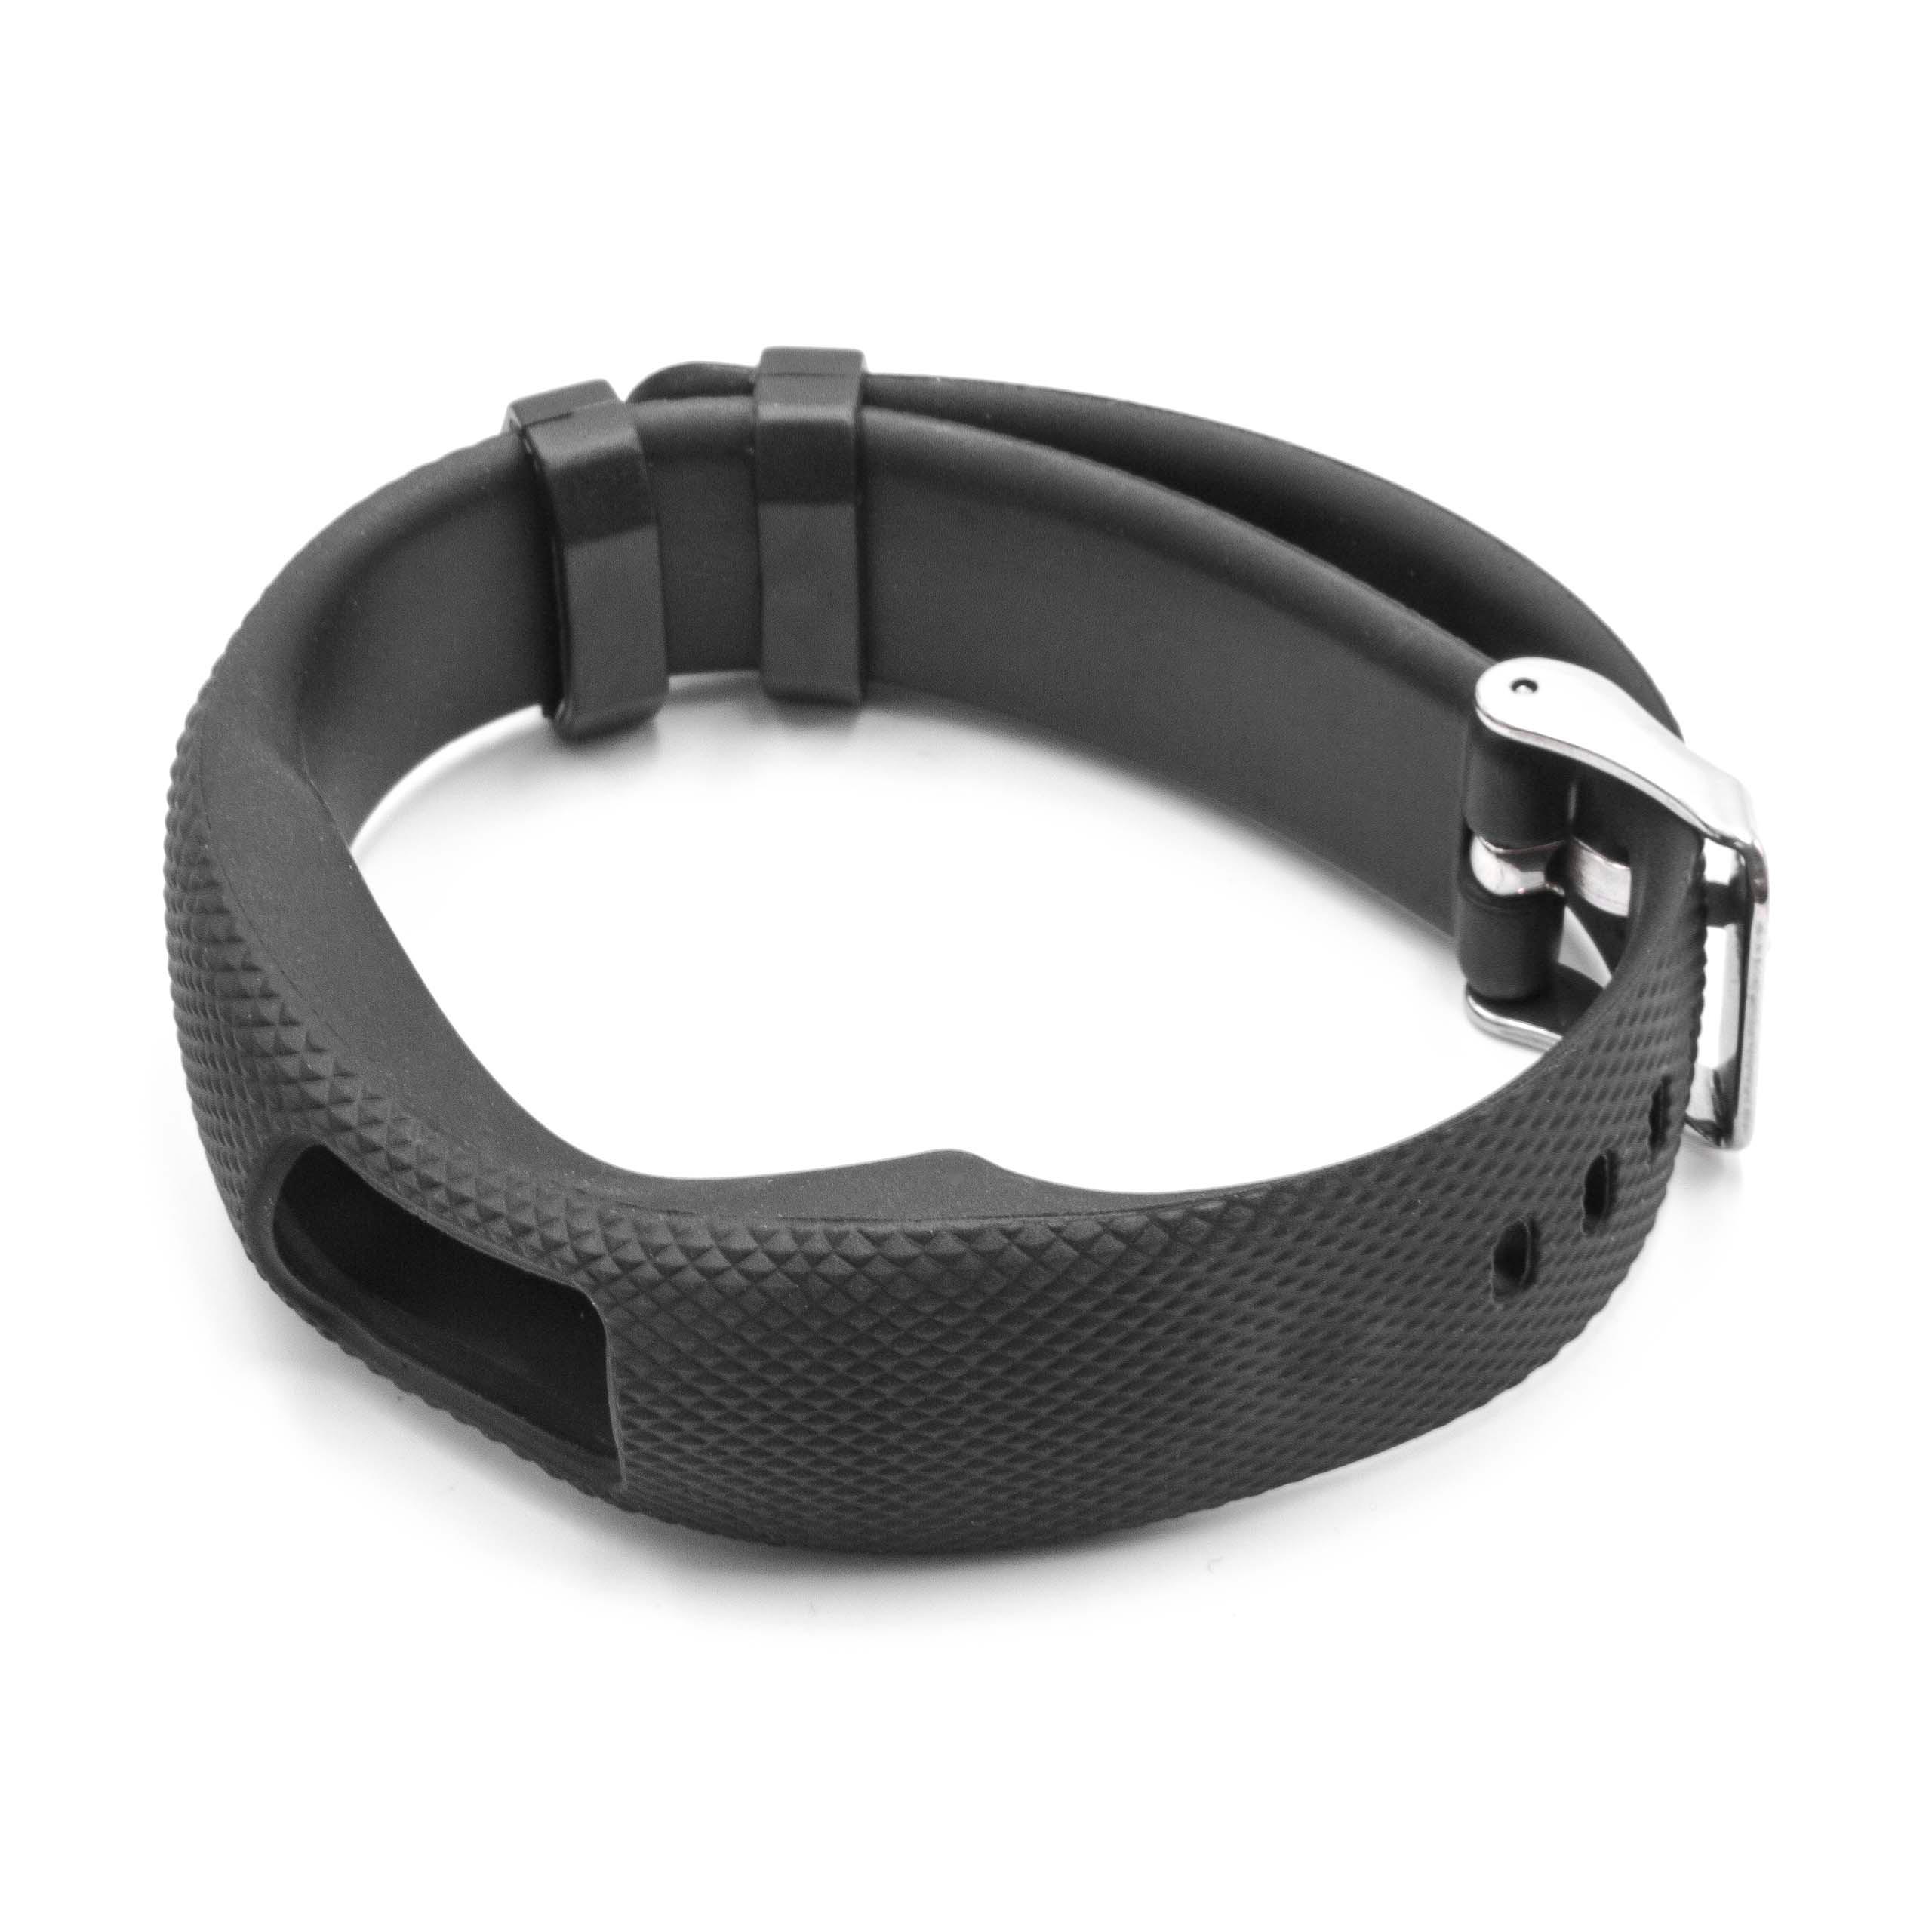 Pasek do smartwatch Garmin Vivofit - dł. 24,5 cm, szer. 19,5 mm, czarny